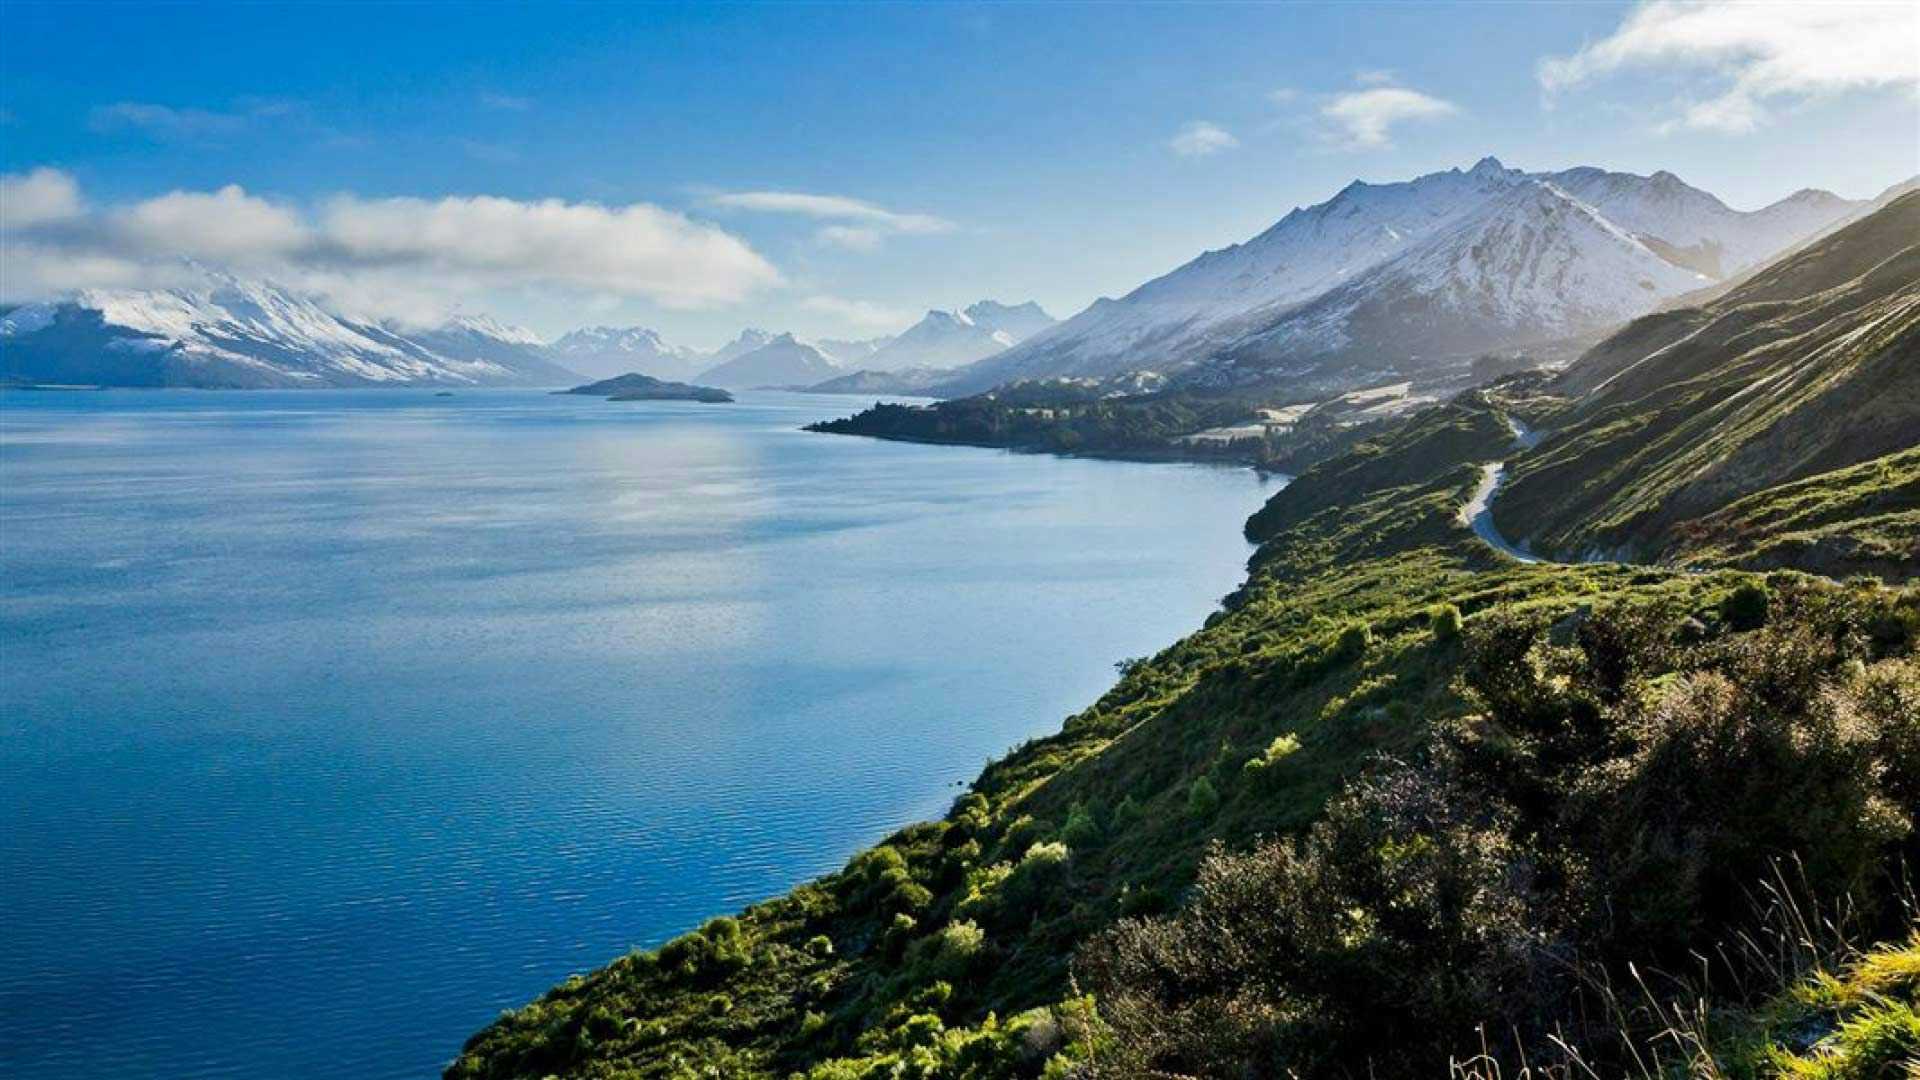 View of Queenstown over Lake Wakatipu